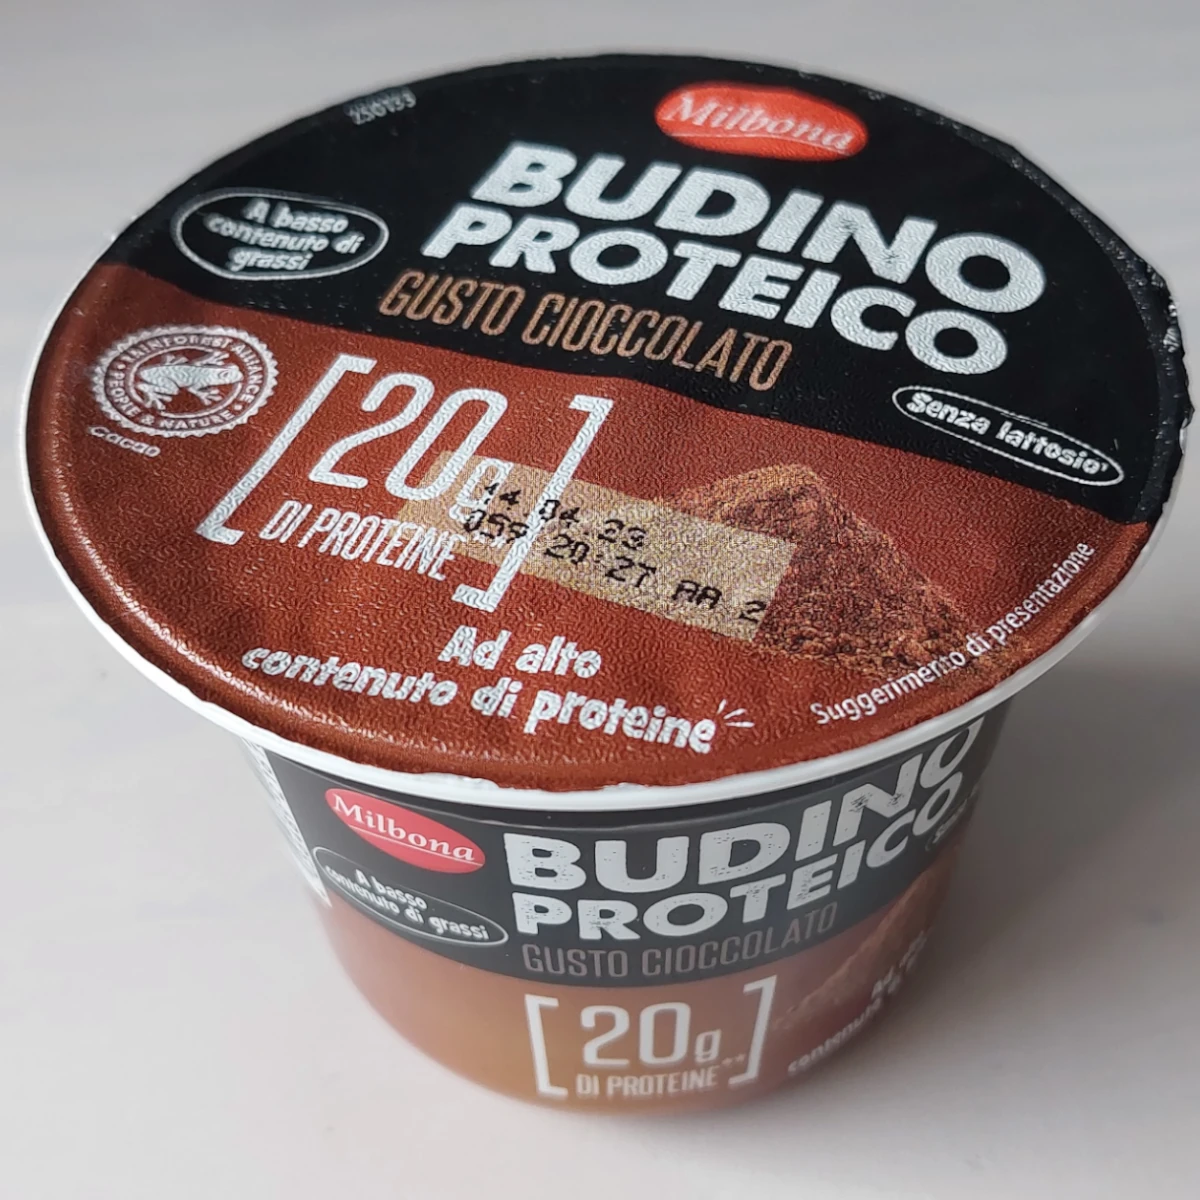 budino-proteico-lidl-cioccolato